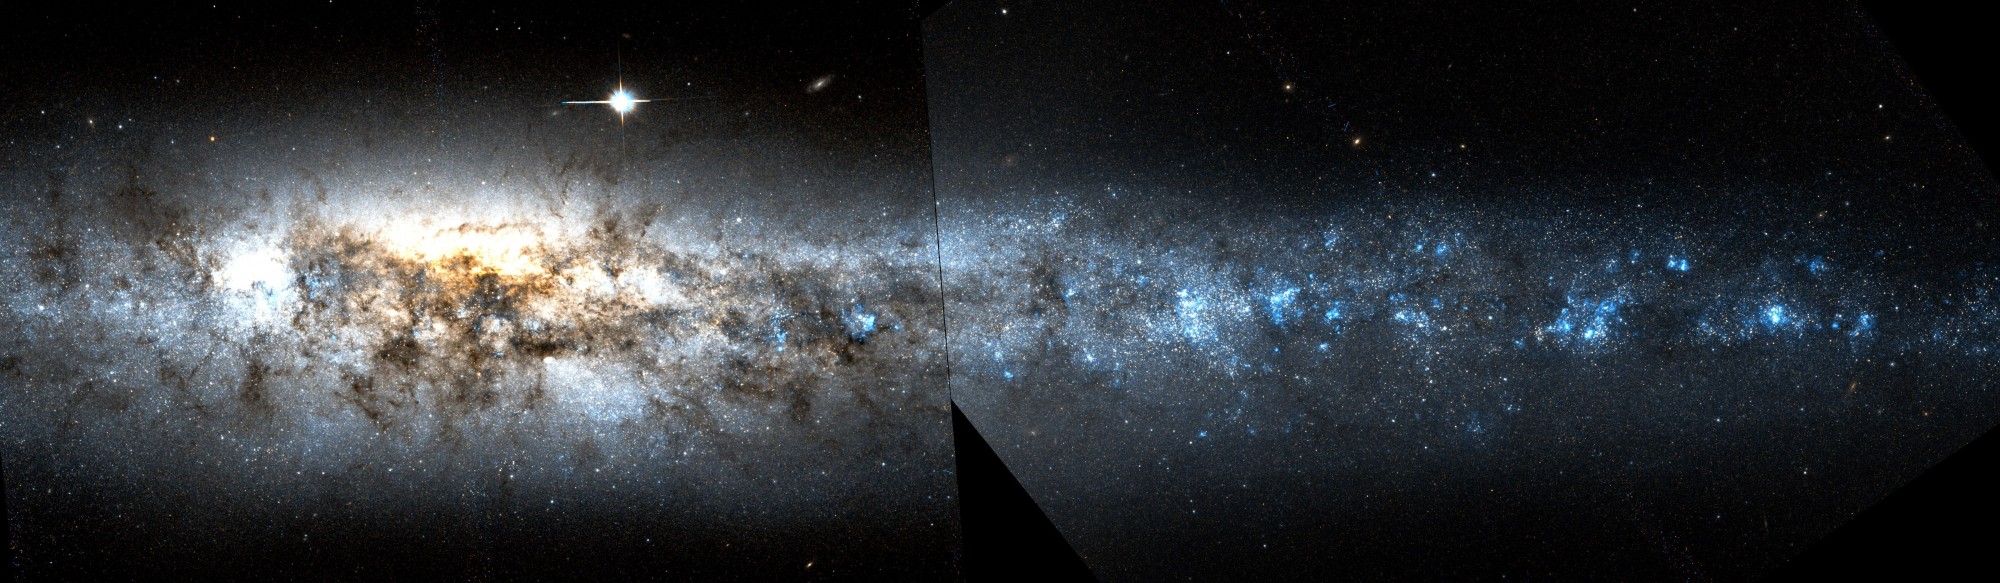 NGC 4631 Hubble mosaic